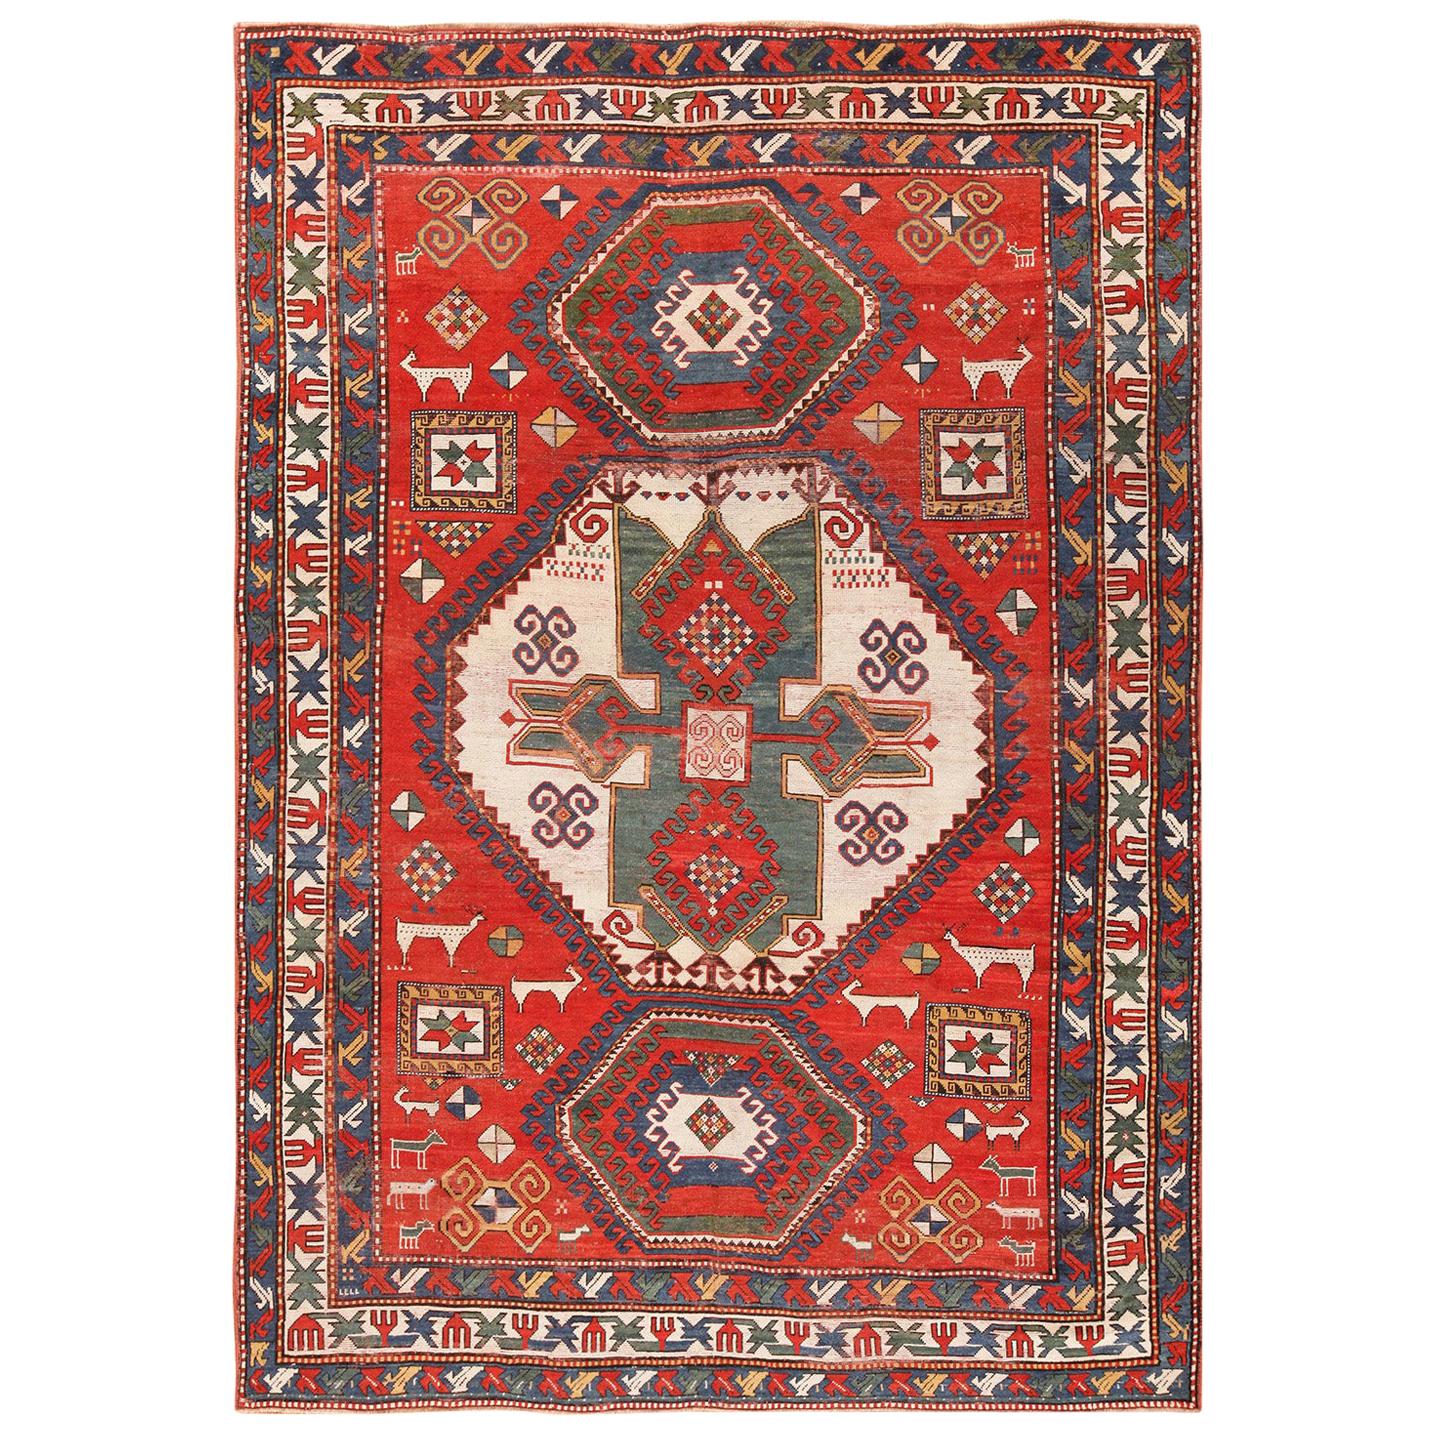 Tribal Antique Caucasian Kazak Rug. Size: 6 ft 7 in x 9 ft 2 in